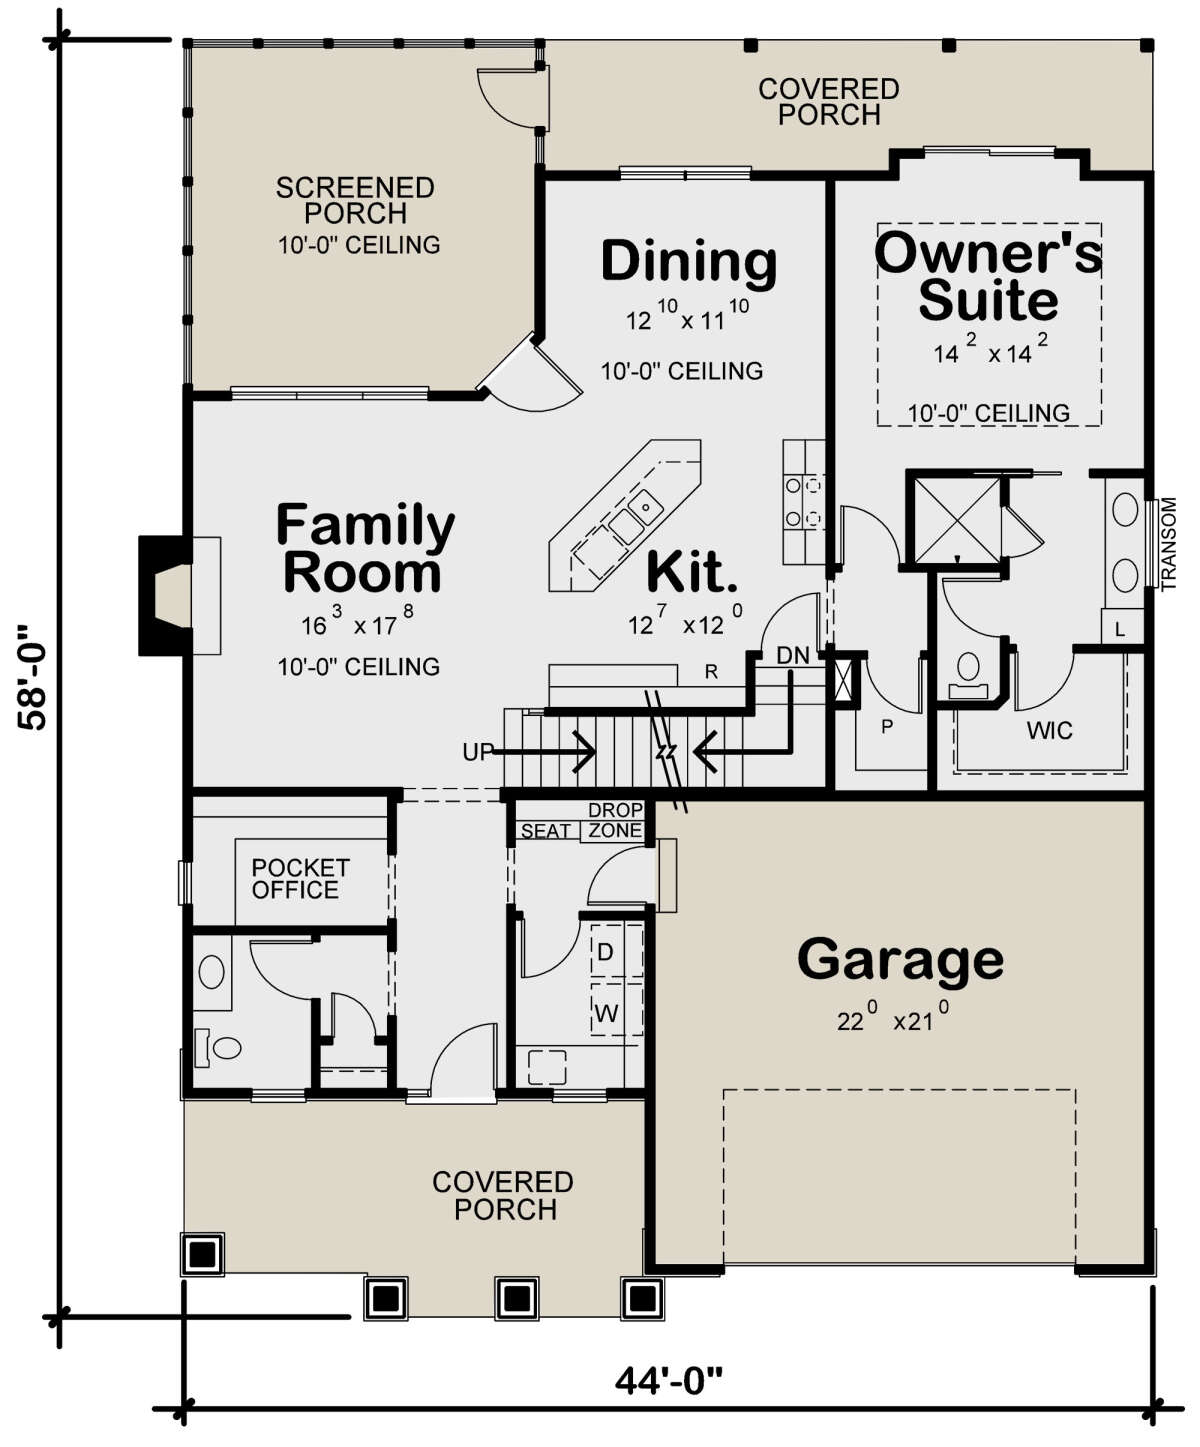 Craftsman Plan: 1,878 Square Feet, 3 Bedrooms, 2.5 Bathrooms - 402-01662